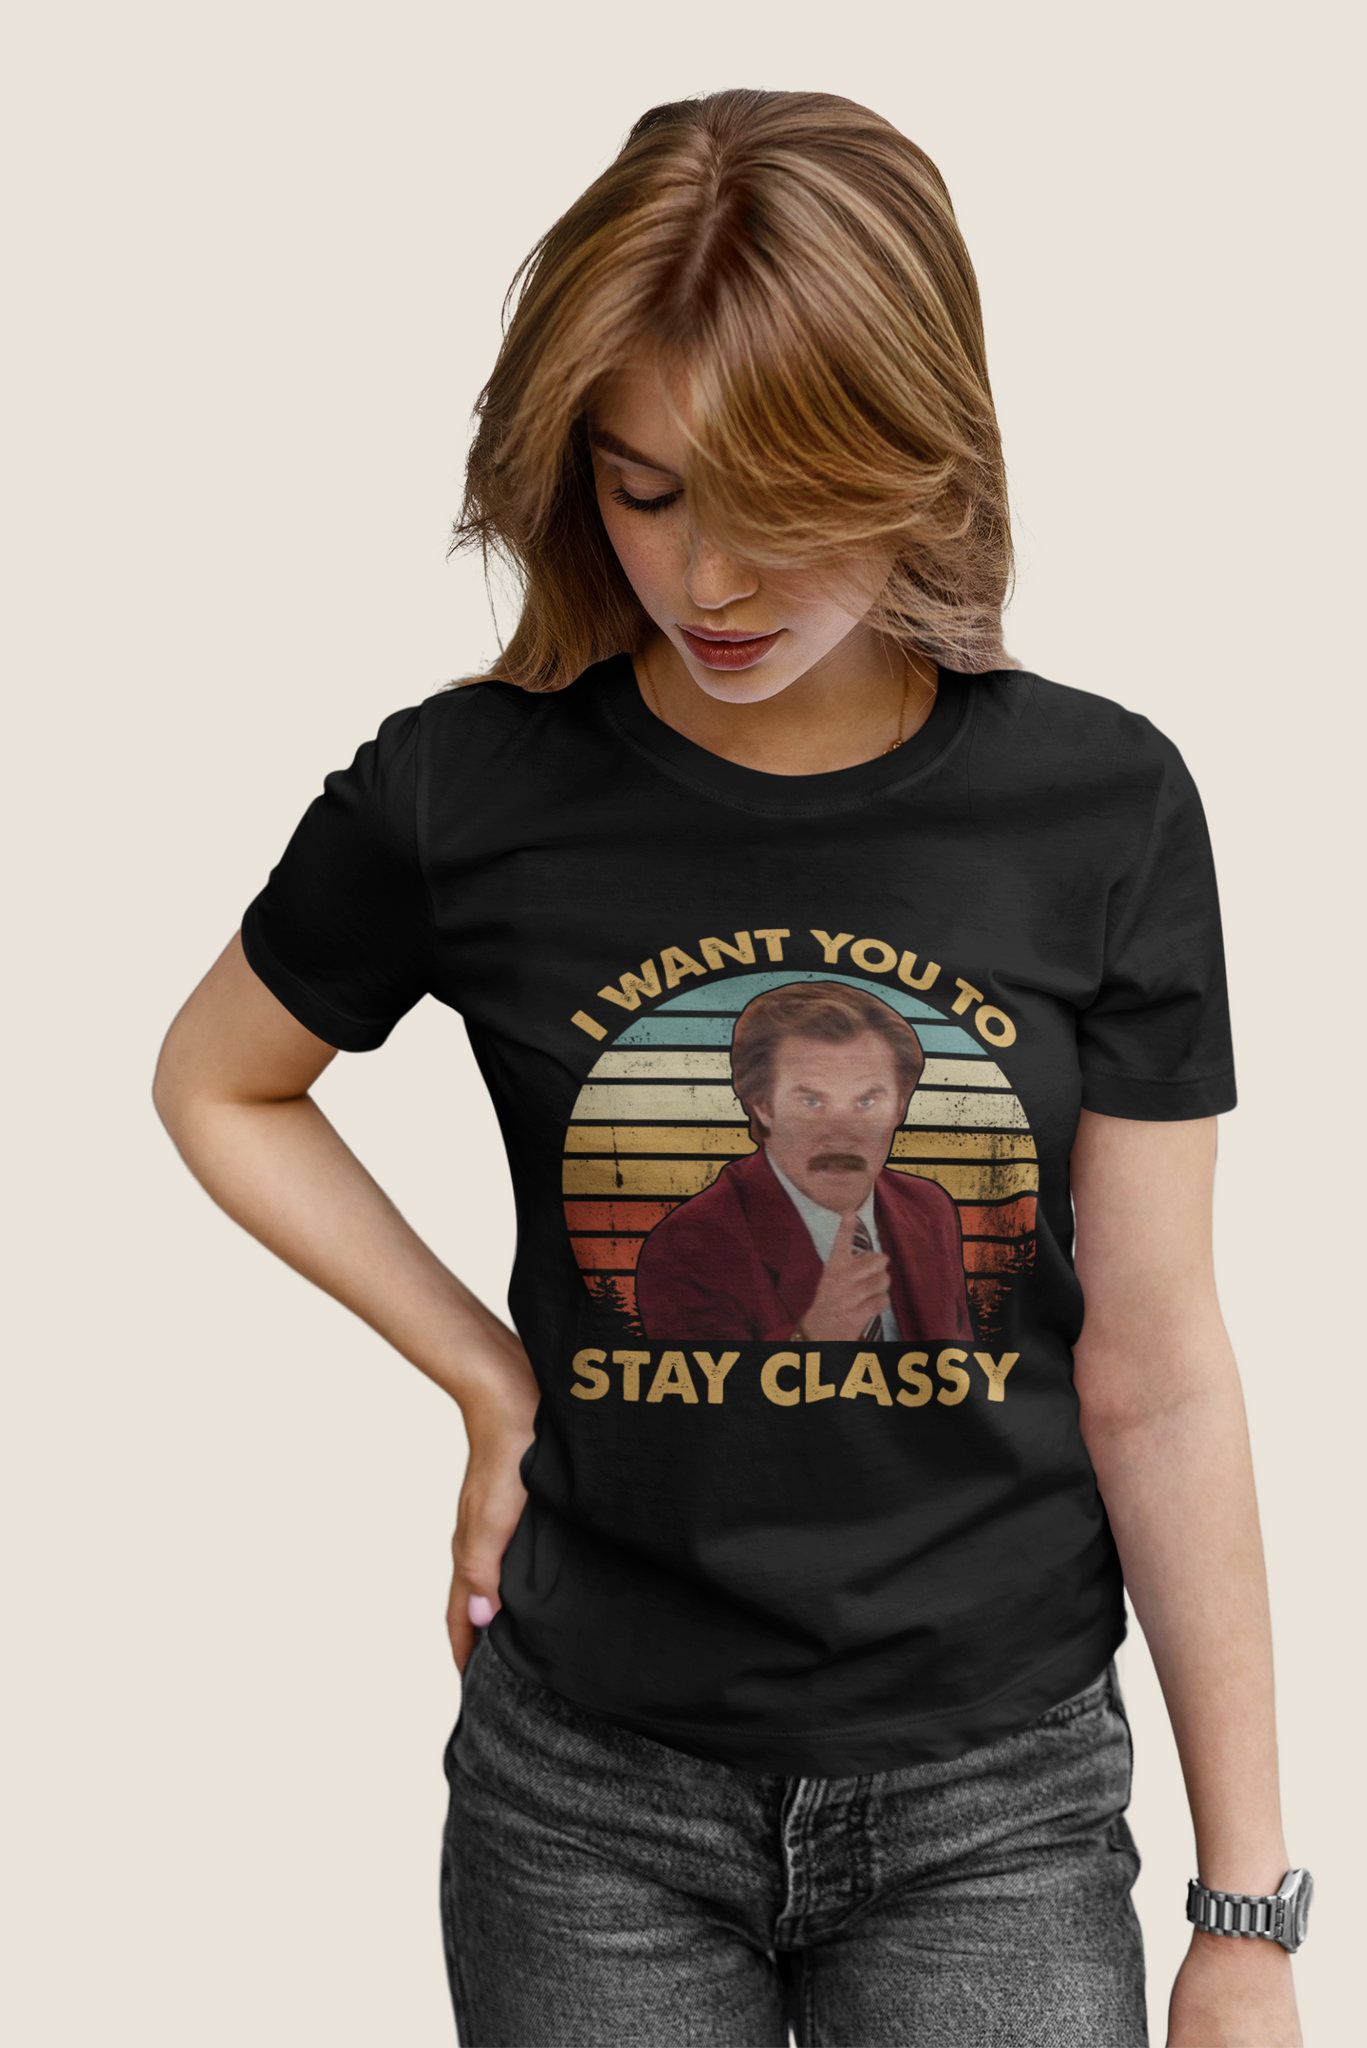 Anchorman Vintage T Shirt, Ron Burgundy T Shirt, I Want You To Stay Classy Shirt